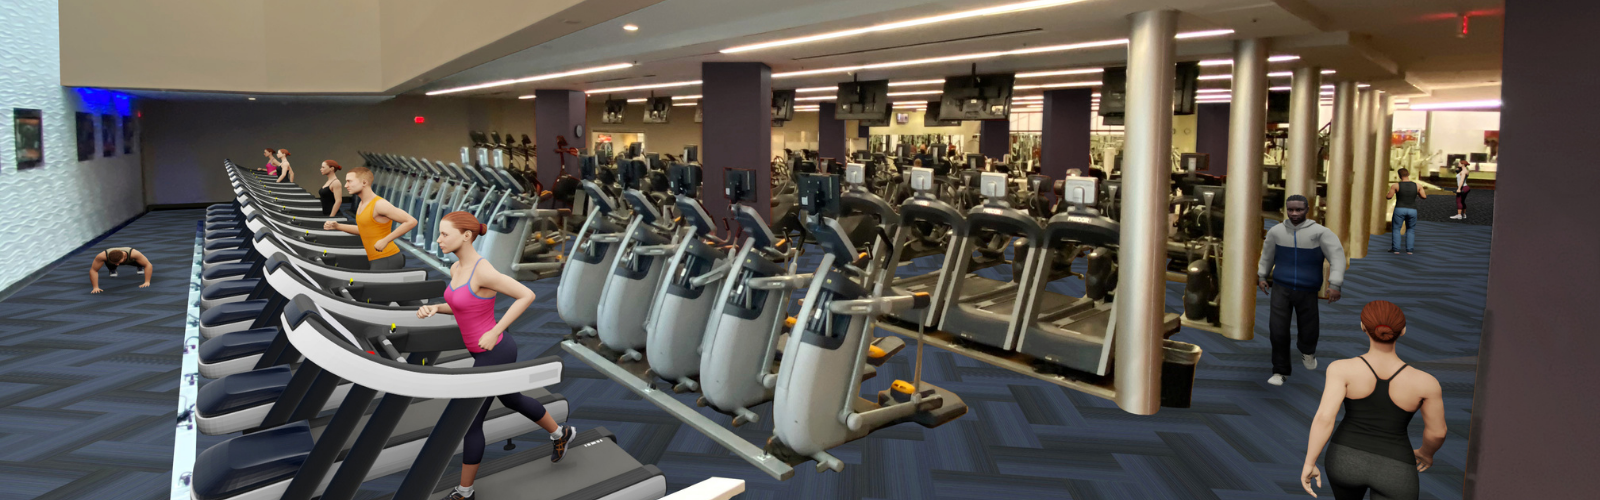 Herndon’s Worldgate fitness facility plans renovation, new programming